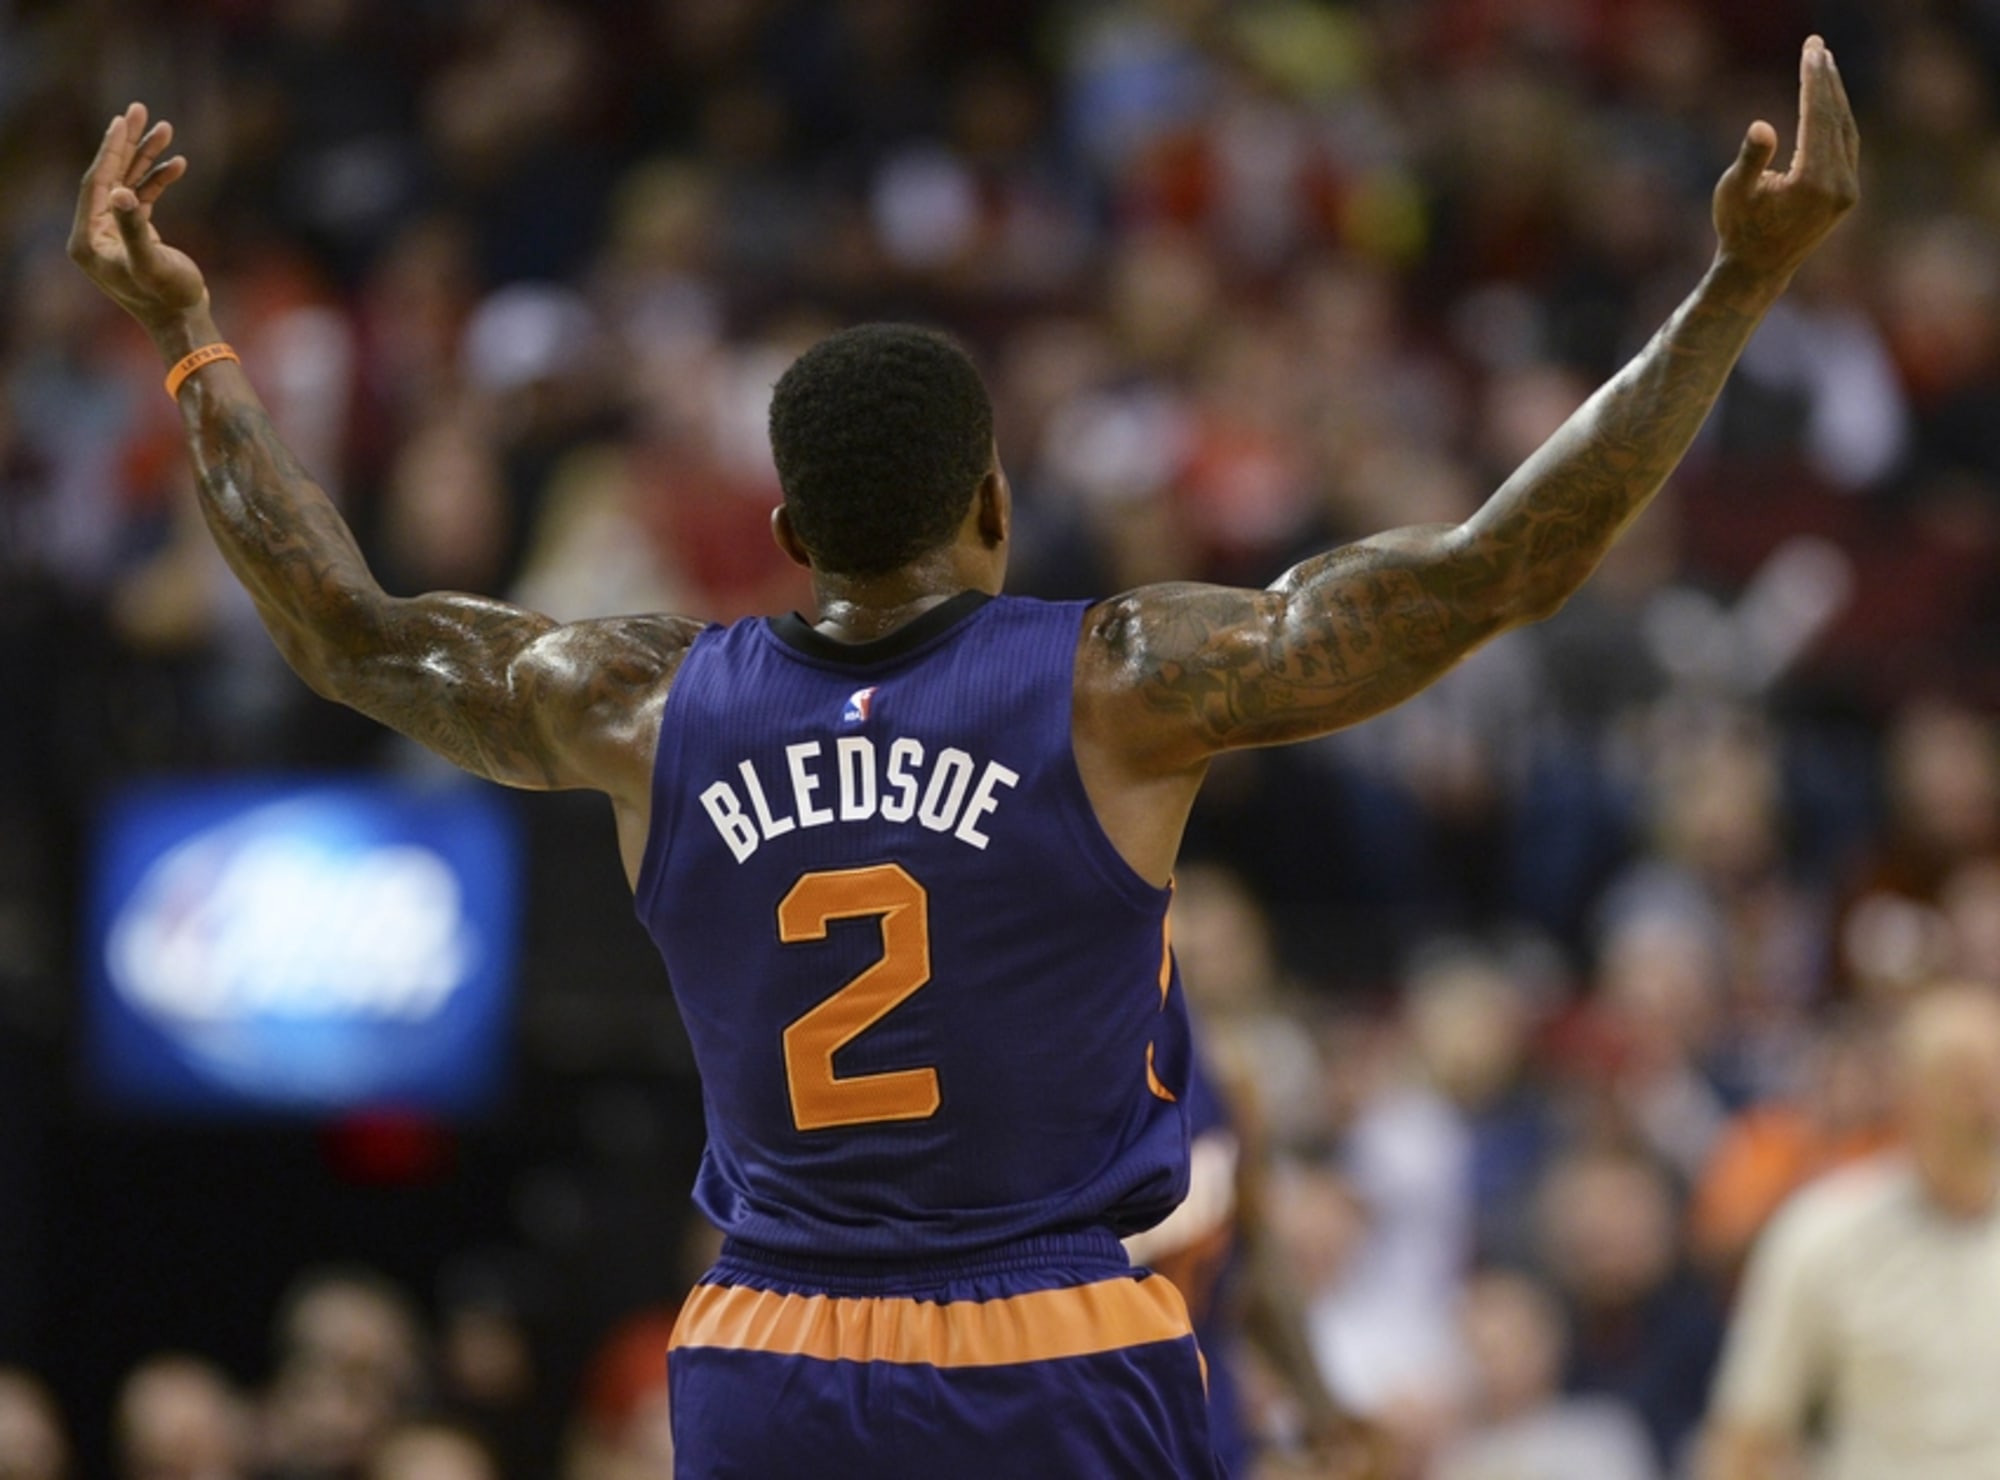 2013-2014 Eric Bledsoe #2 Phoenix Suns adidas NBA Basketball